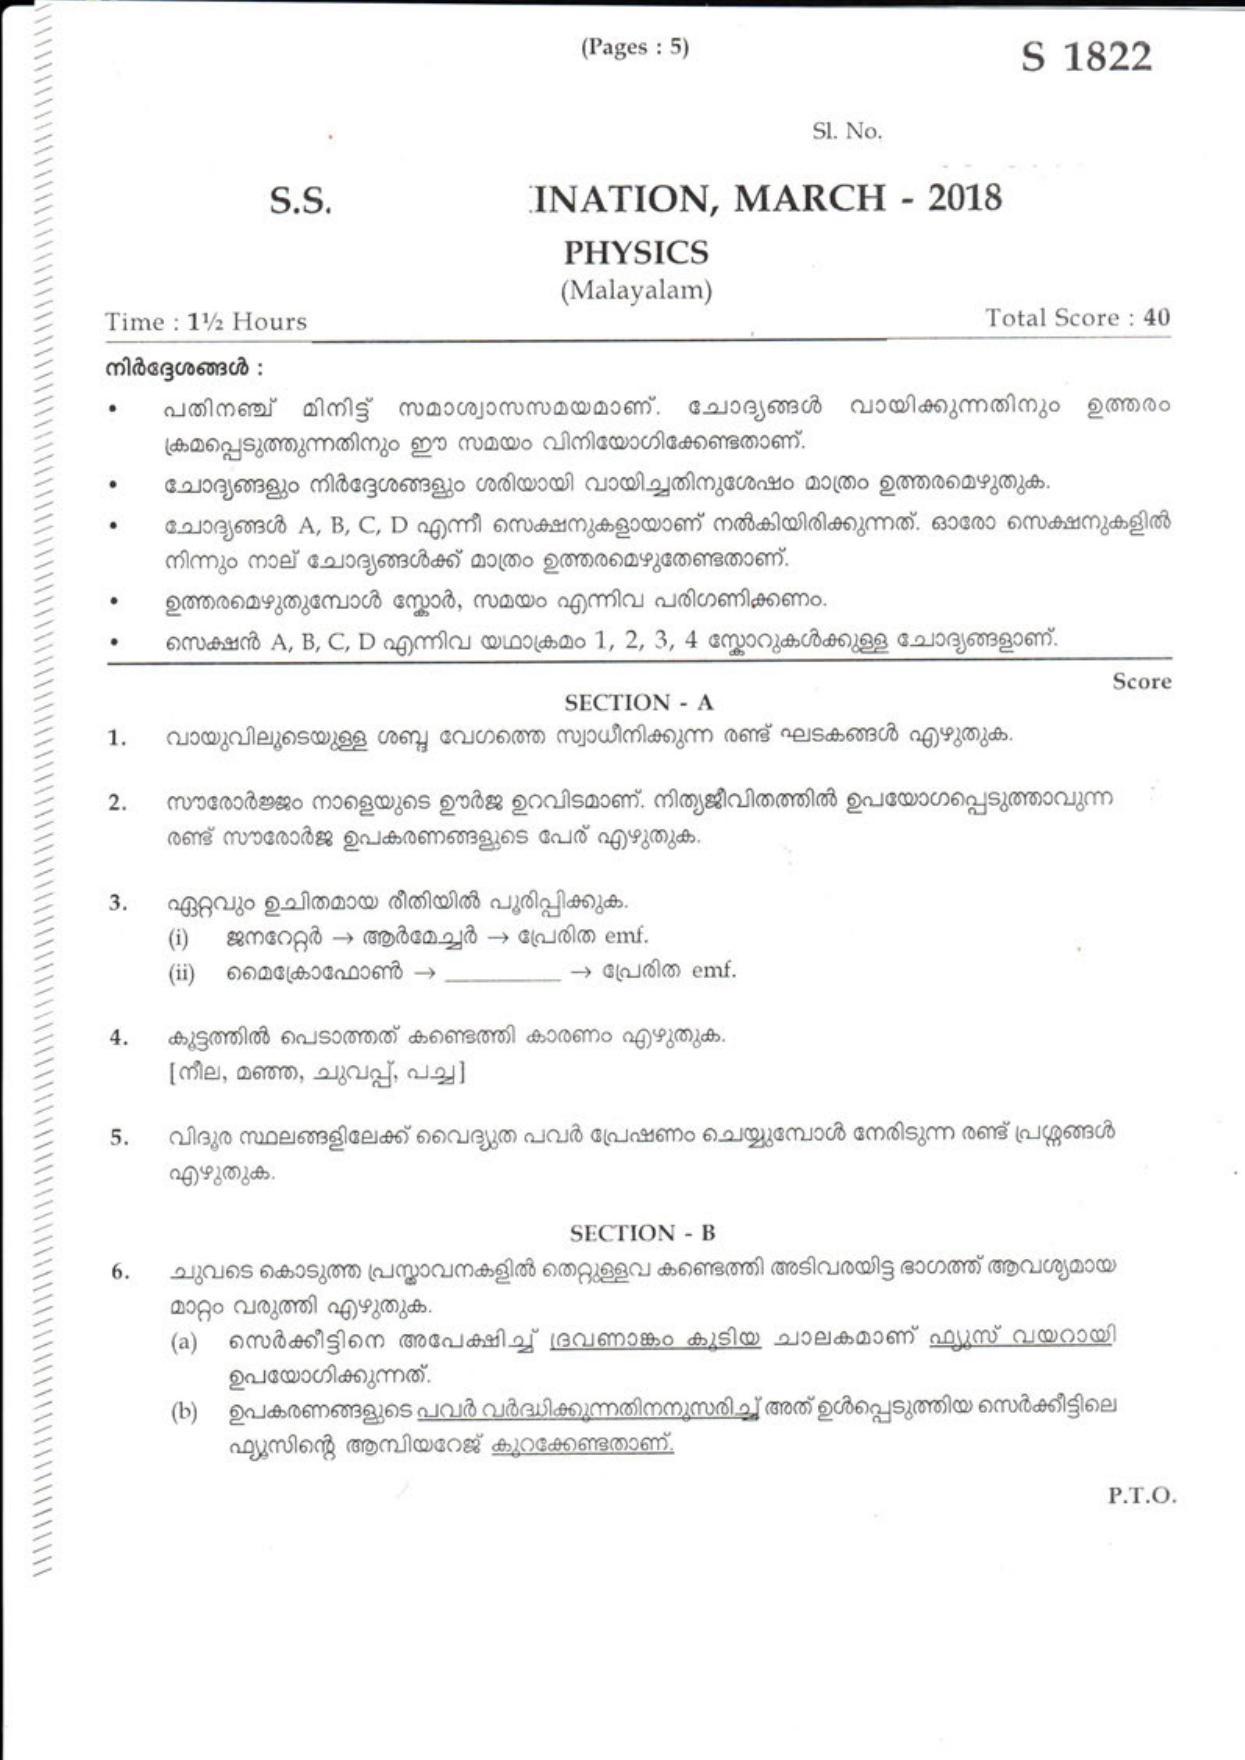 Kerala SSLC 2018 Physics Question Paper - Page 1